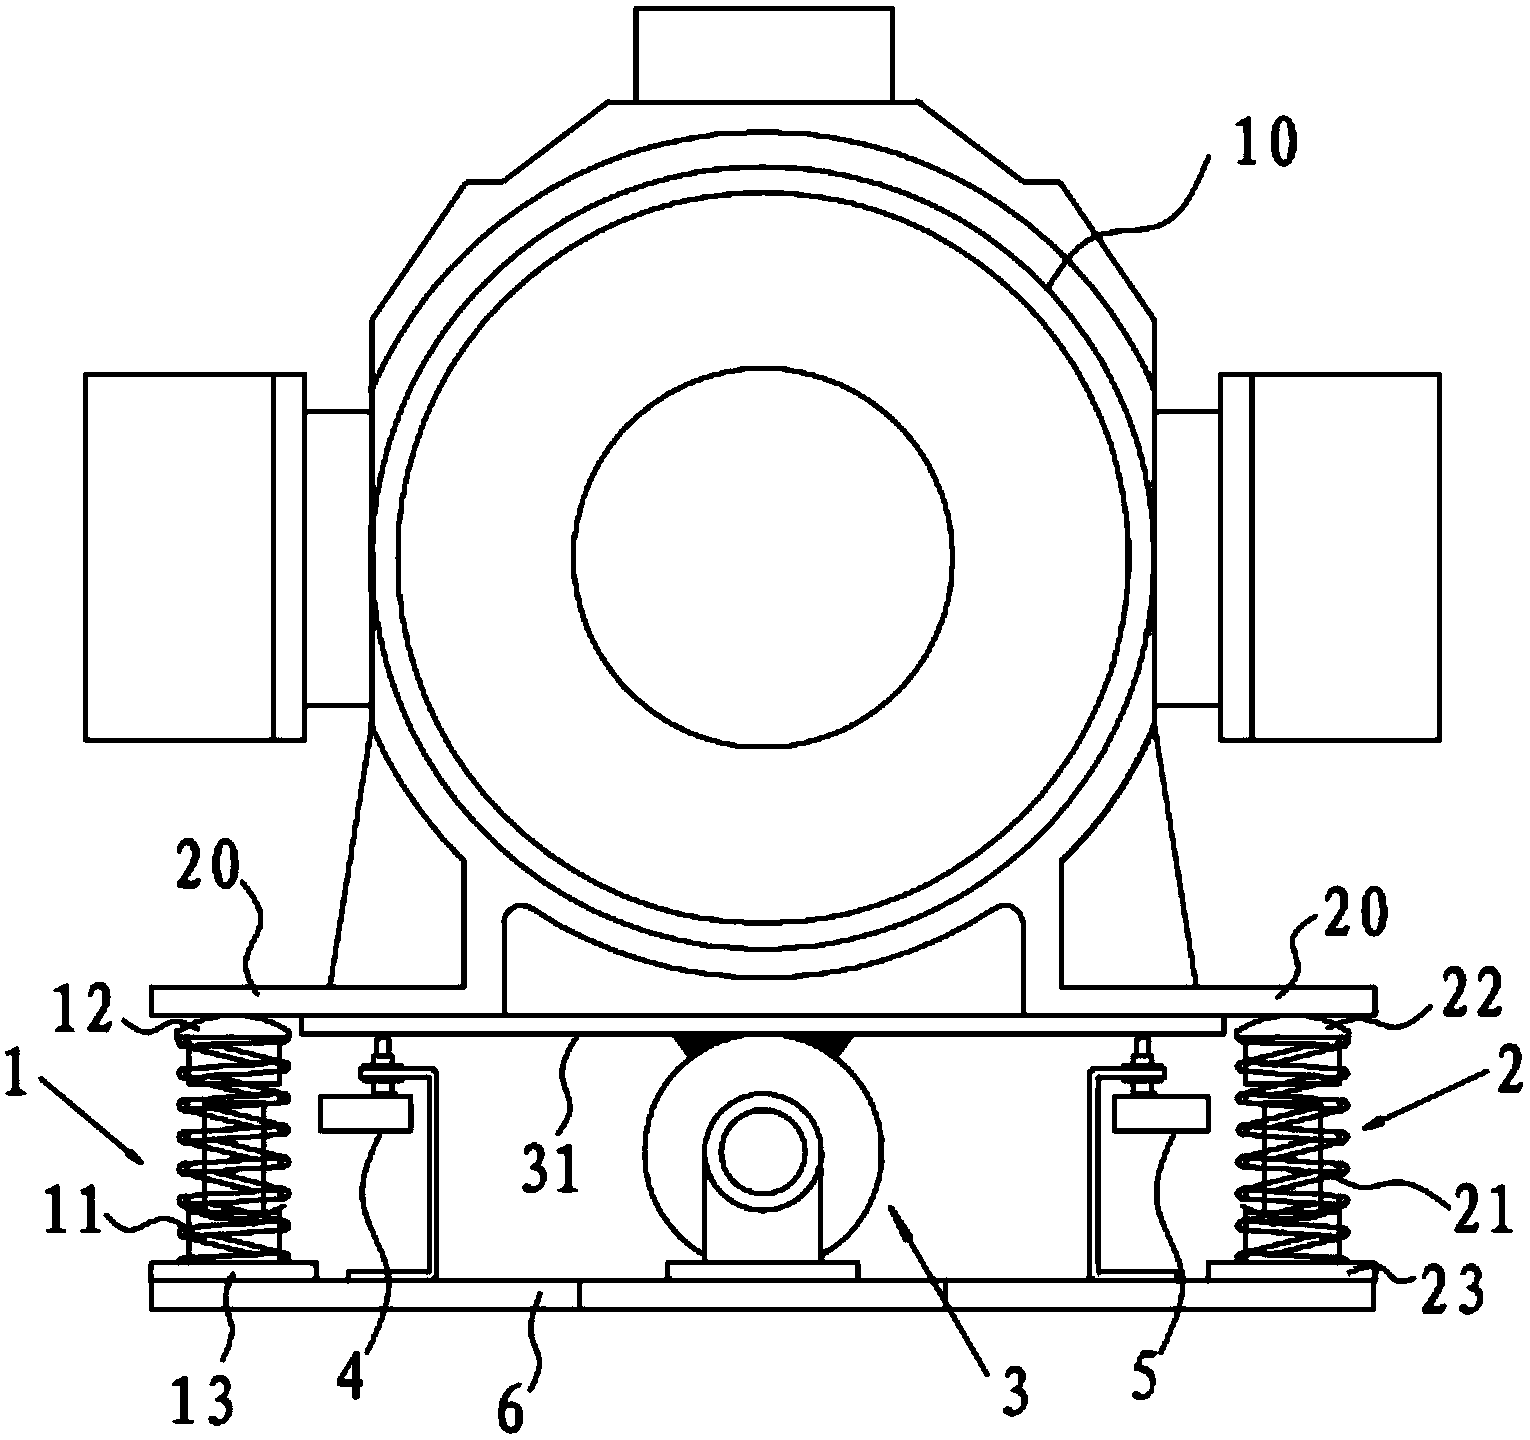 Automatic balancing mechanism of traction machine